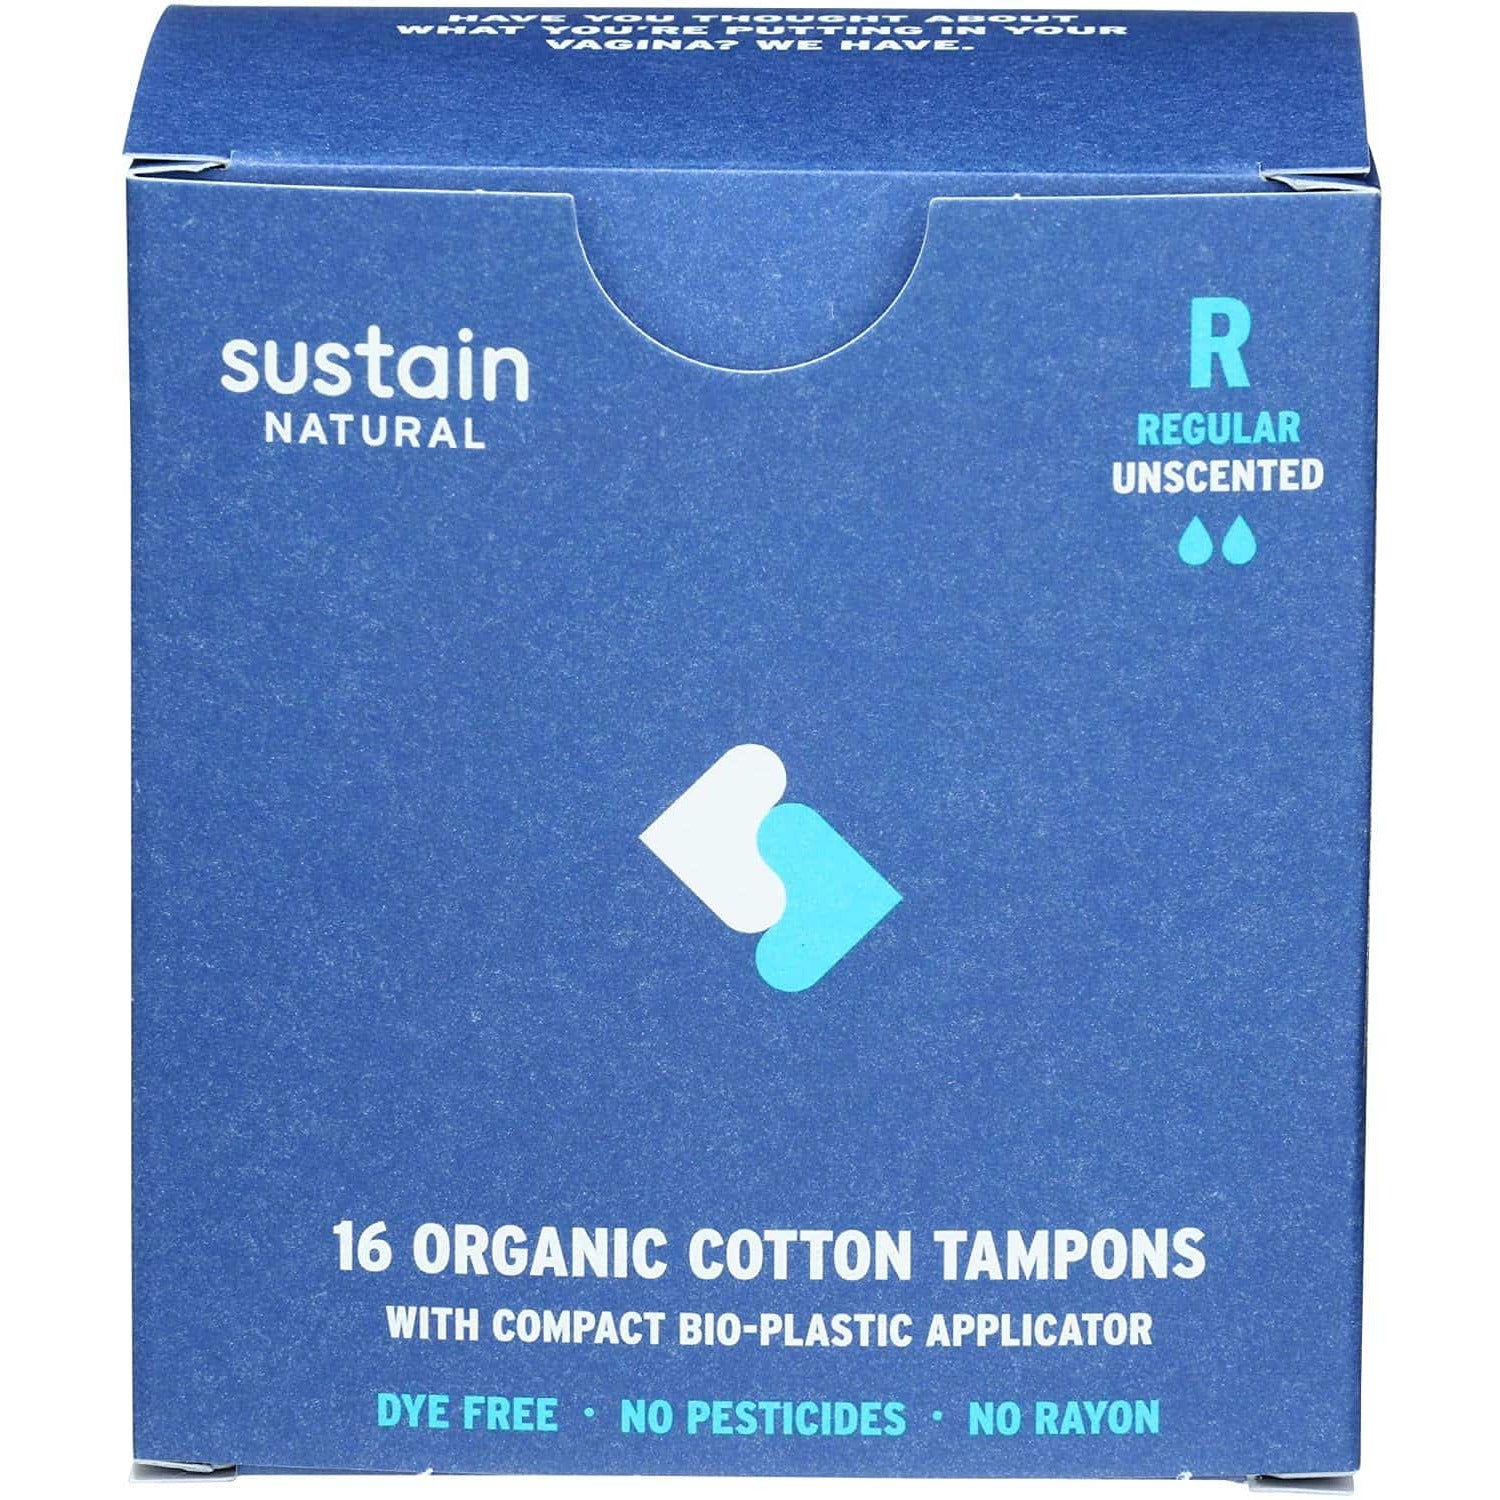 Sustain, Tampons Cotton Regular Organic, 16 Count